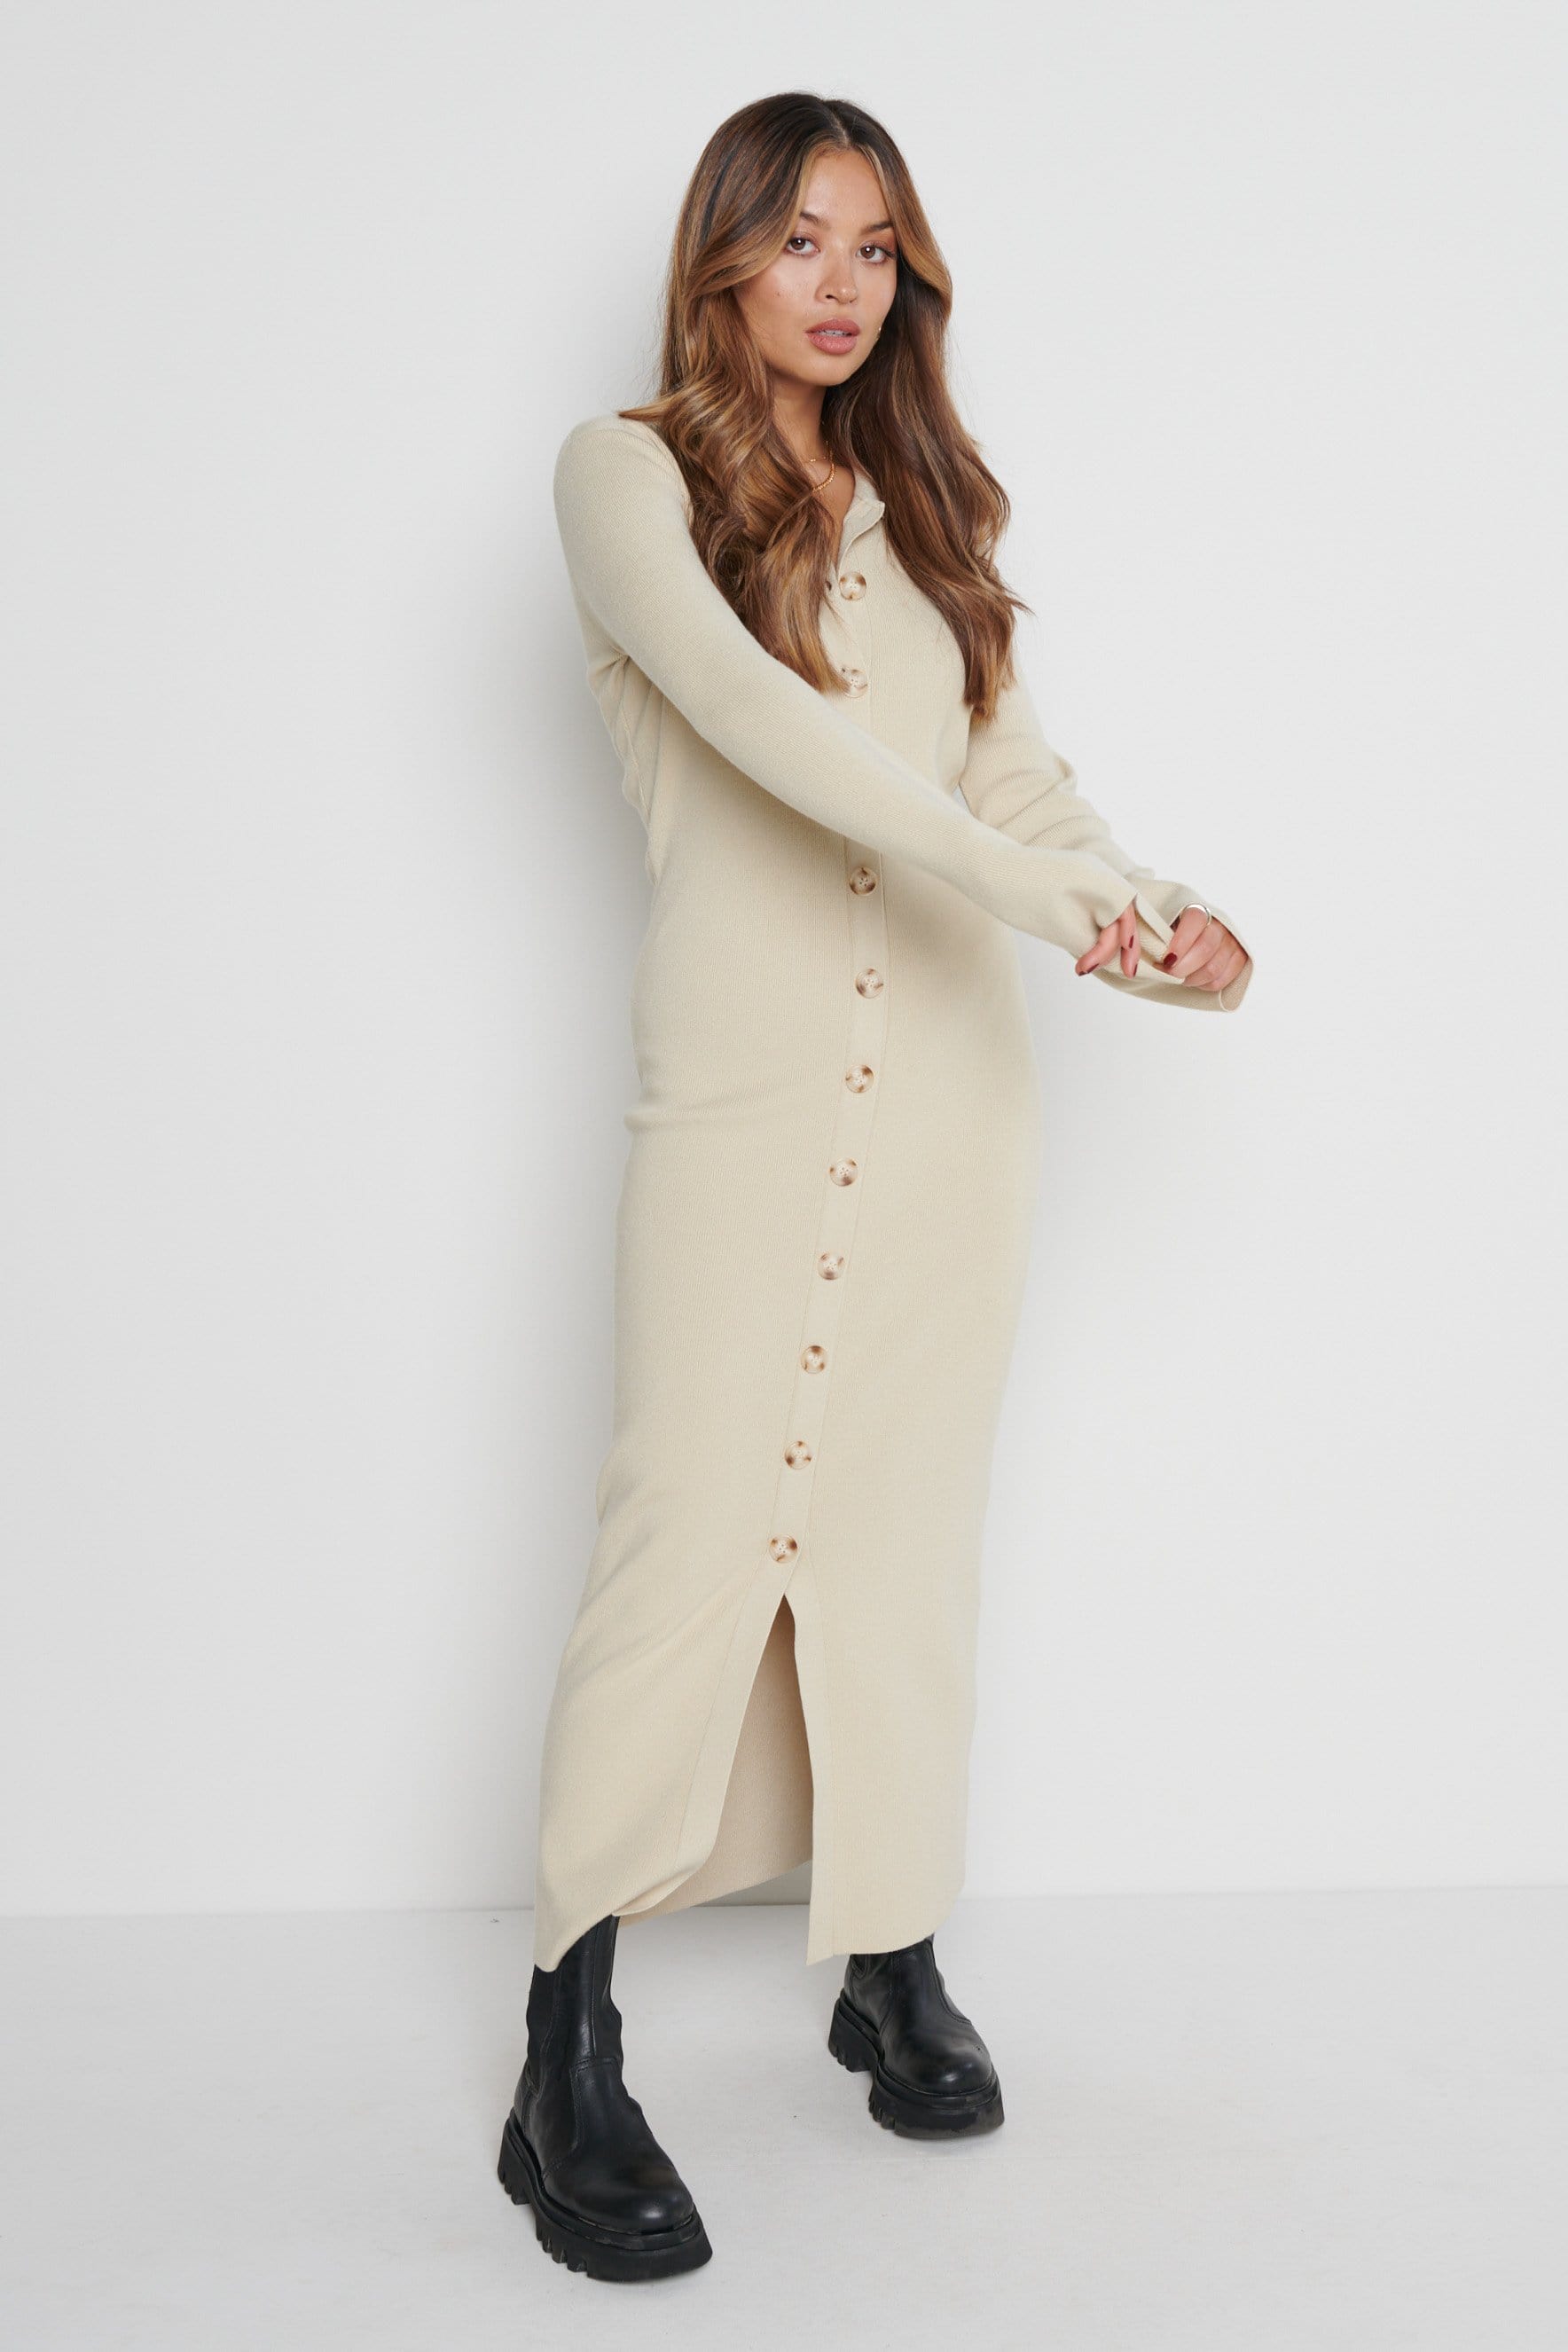 Elsa Knit Button Dress - Beige